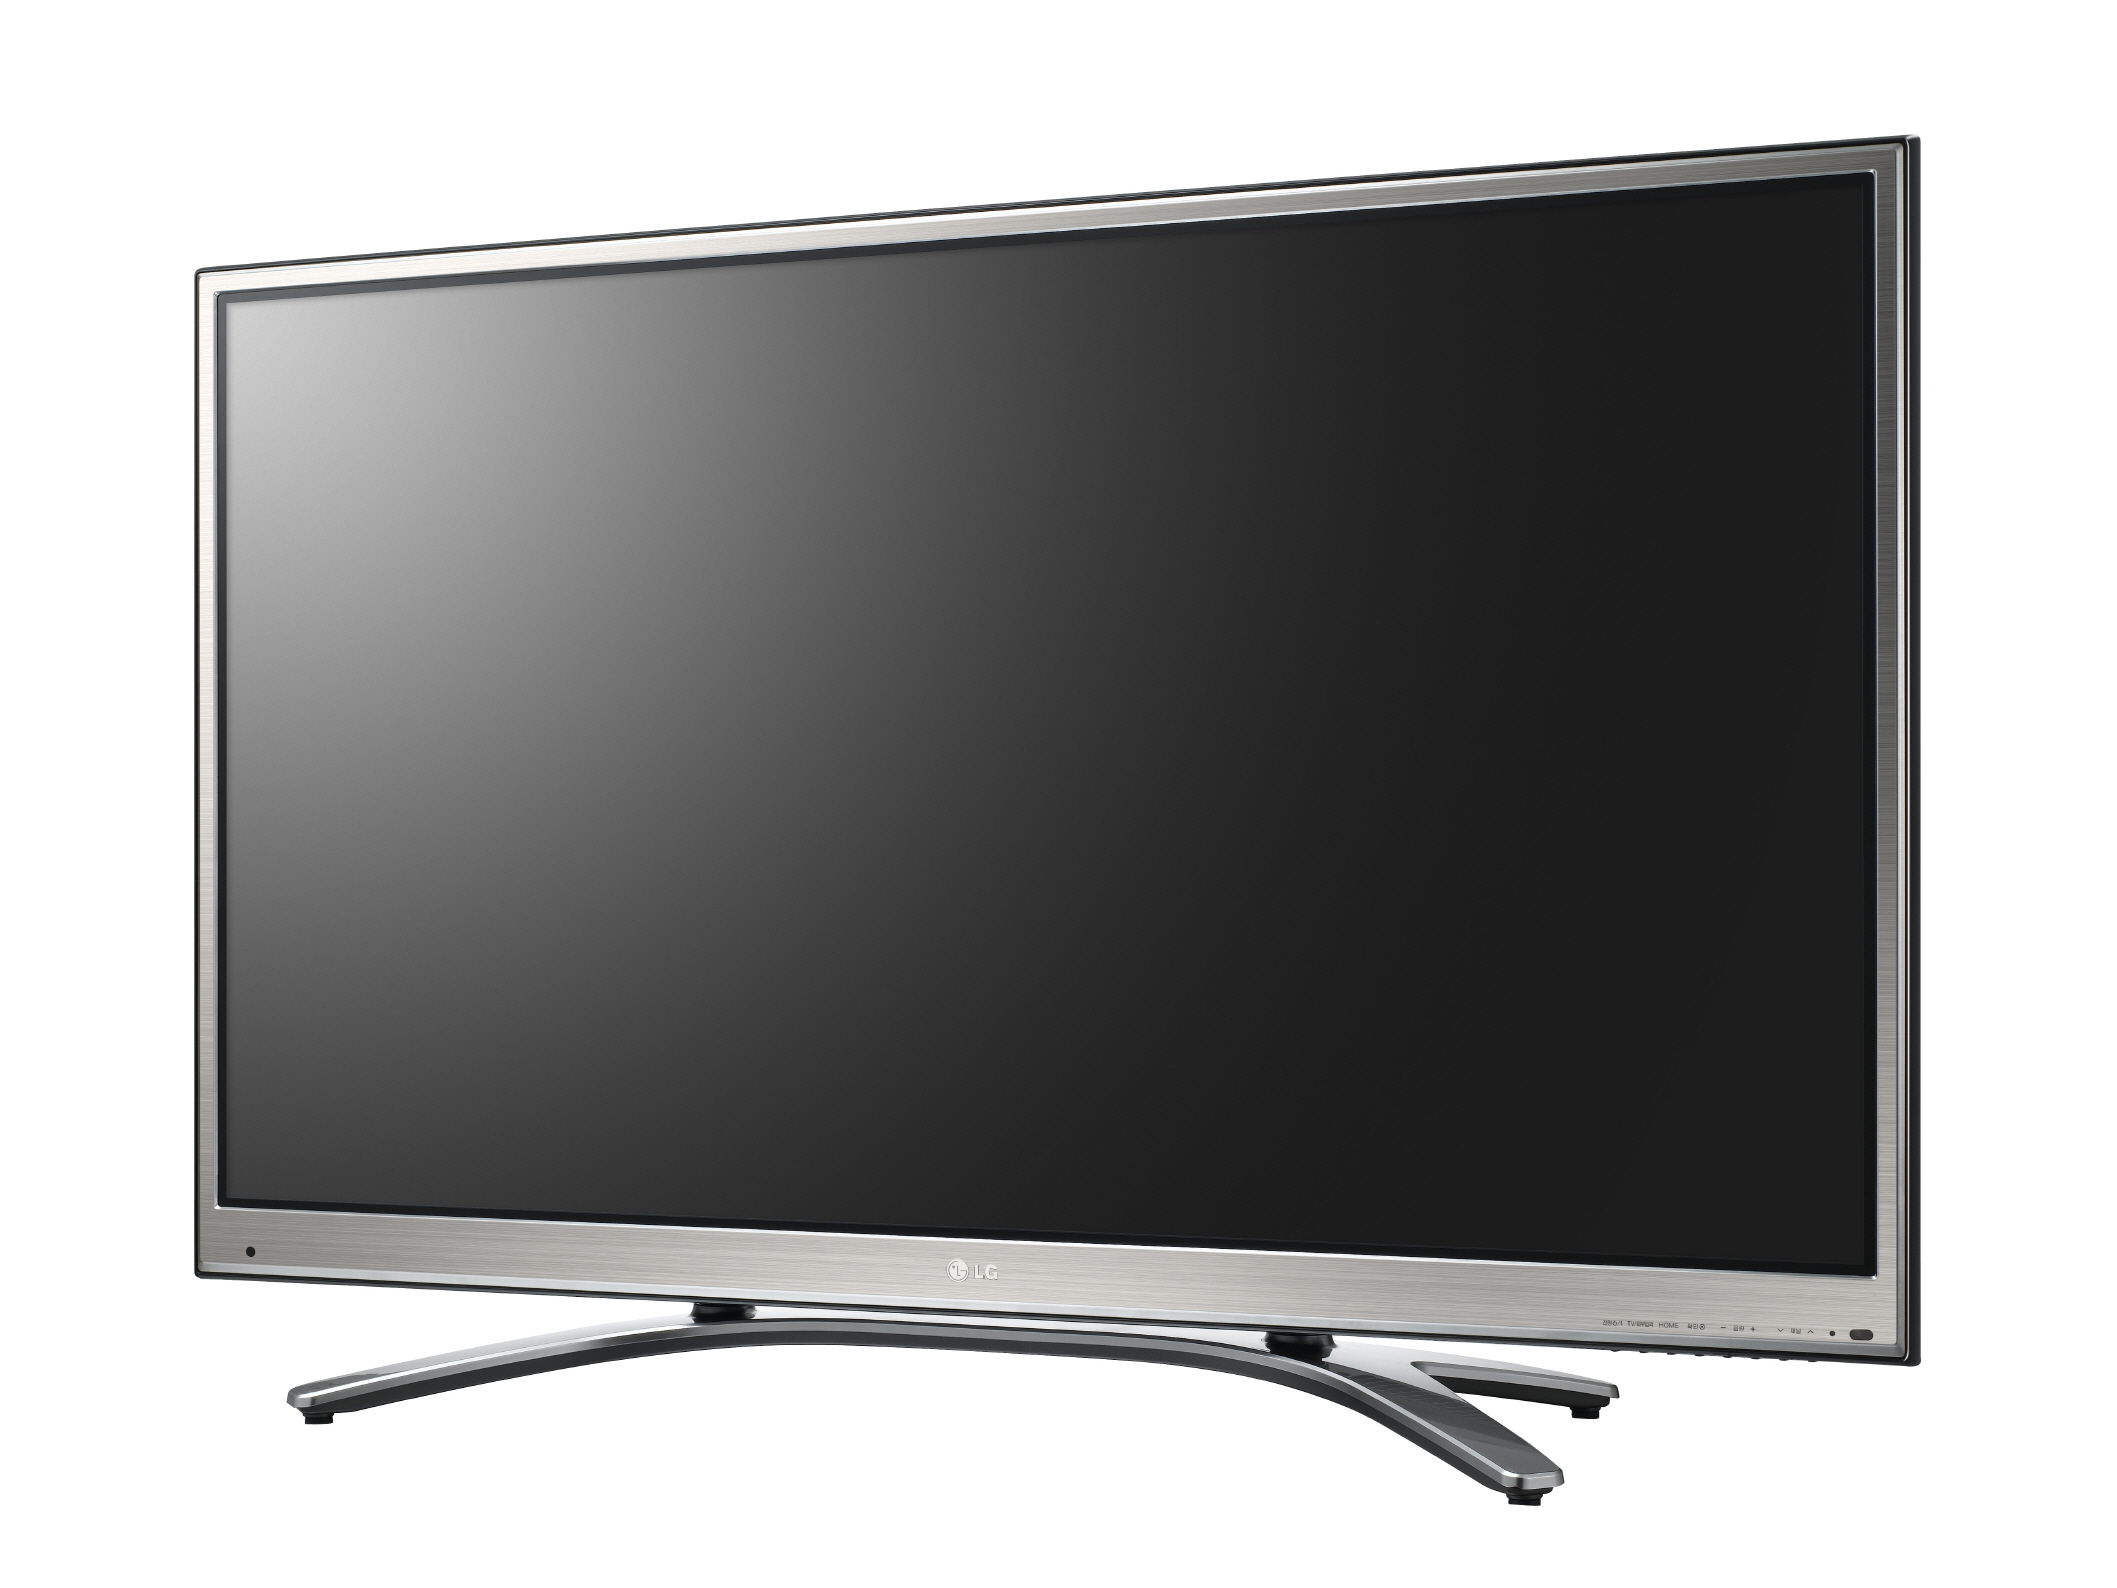 LG Pentouch TV model PZ850